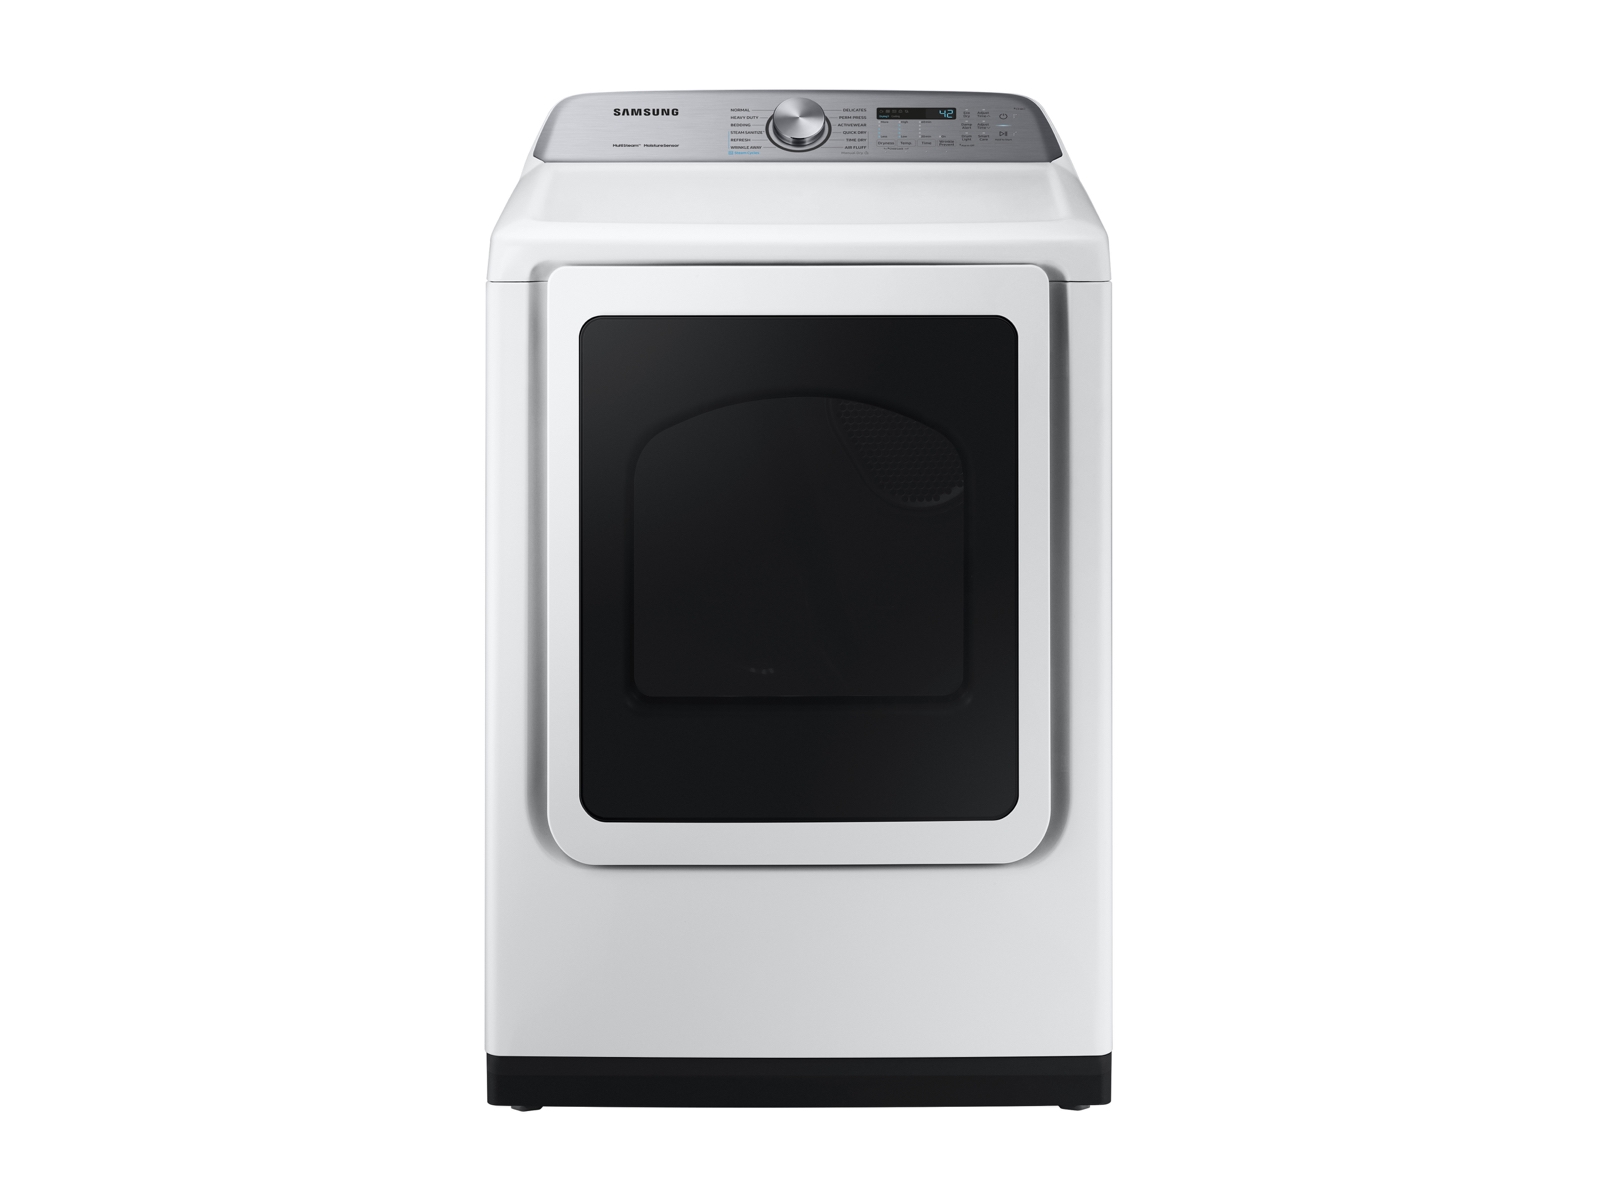 Samsung 7.4 cu. ft. Gas Dryer with Steam Sanitize+ in White(DVG50R5400W/A3)